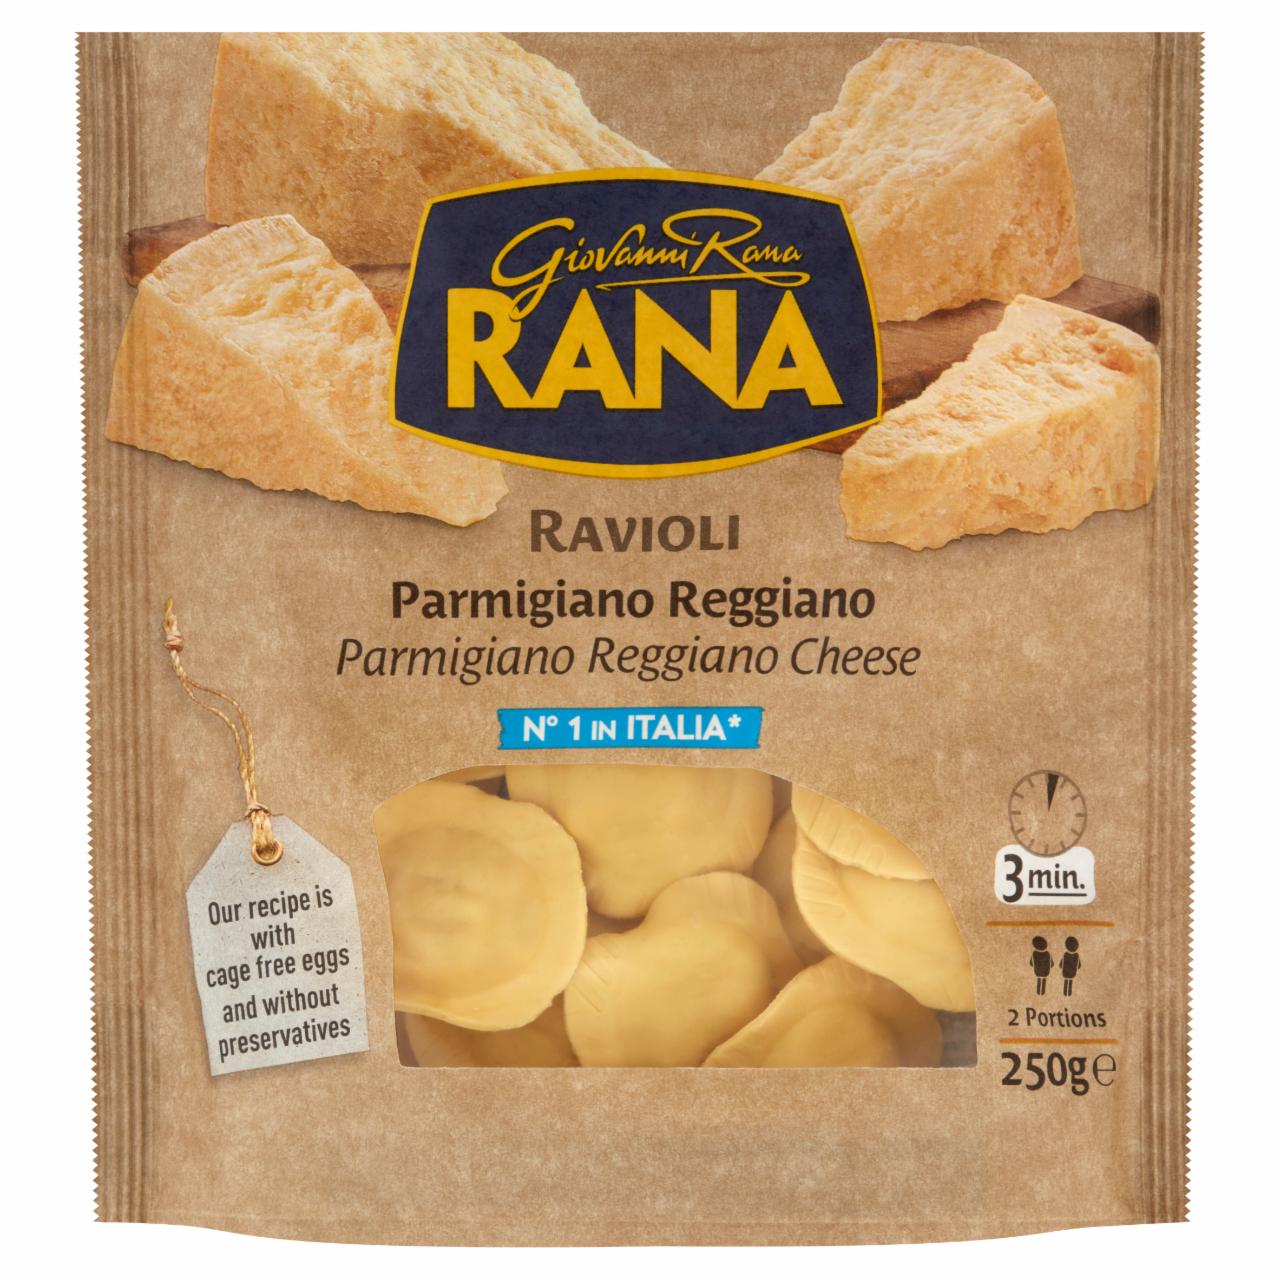 Zdjęcia - Ravioli parmigiano reggiano Rana